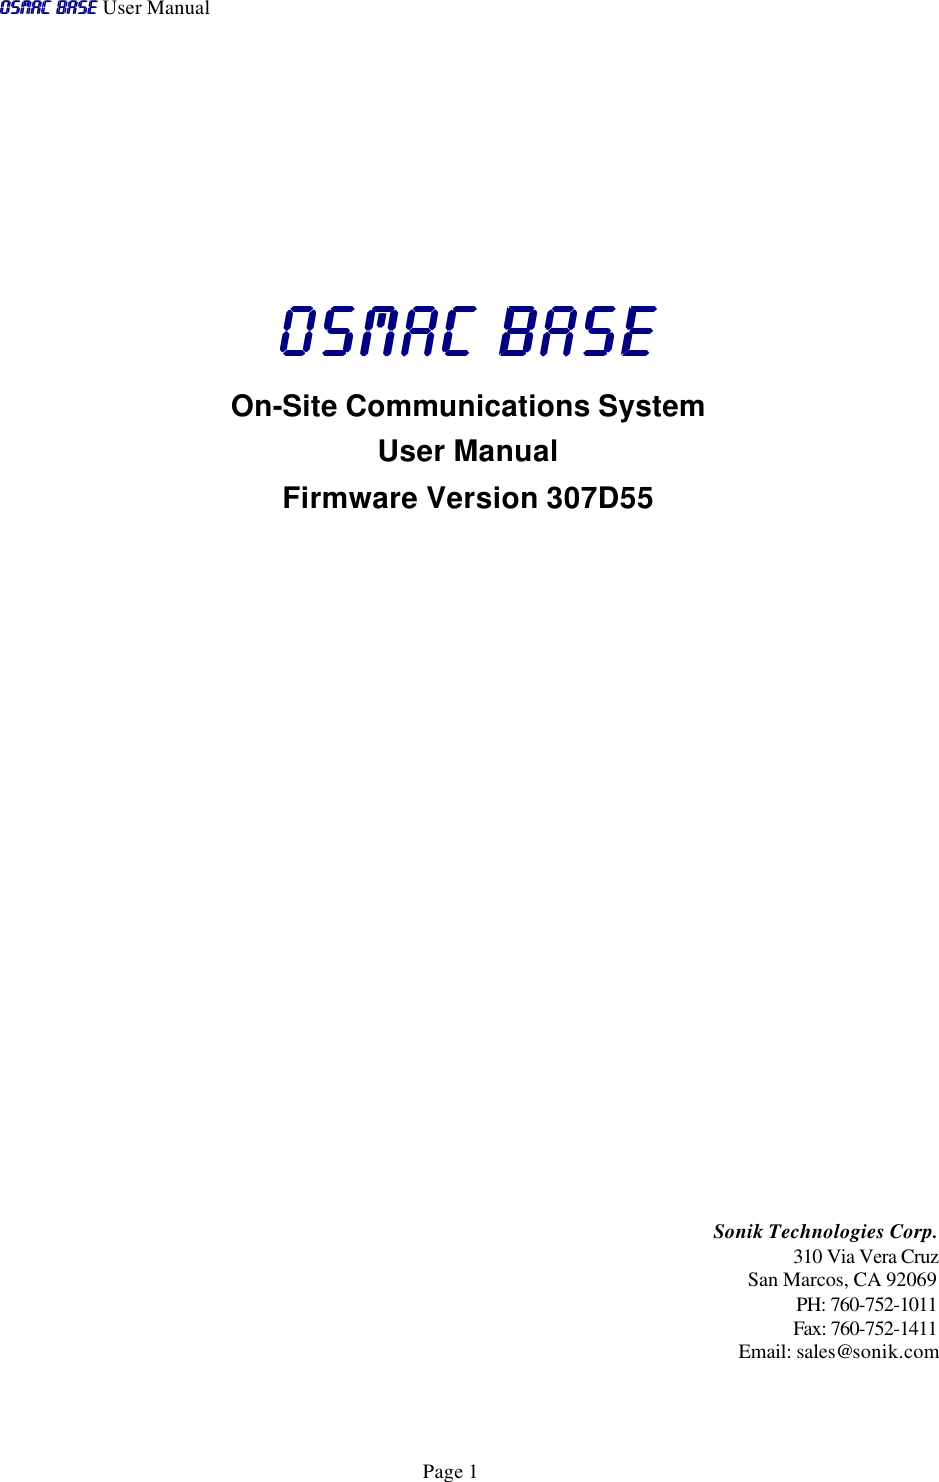 OSMAC BaseOSMAC Base User Manual      Page 1         OSMAC BaseOSMAC Base  On-Site Communications System User Manual  Firmware Version 307D55                    Sonik Technologies Corp. 310 Via Vera Cruz San Marcos, CA 92069 PH: 760-752-1011 Fax: 760-752-1411 Email: sales@sonik.com 